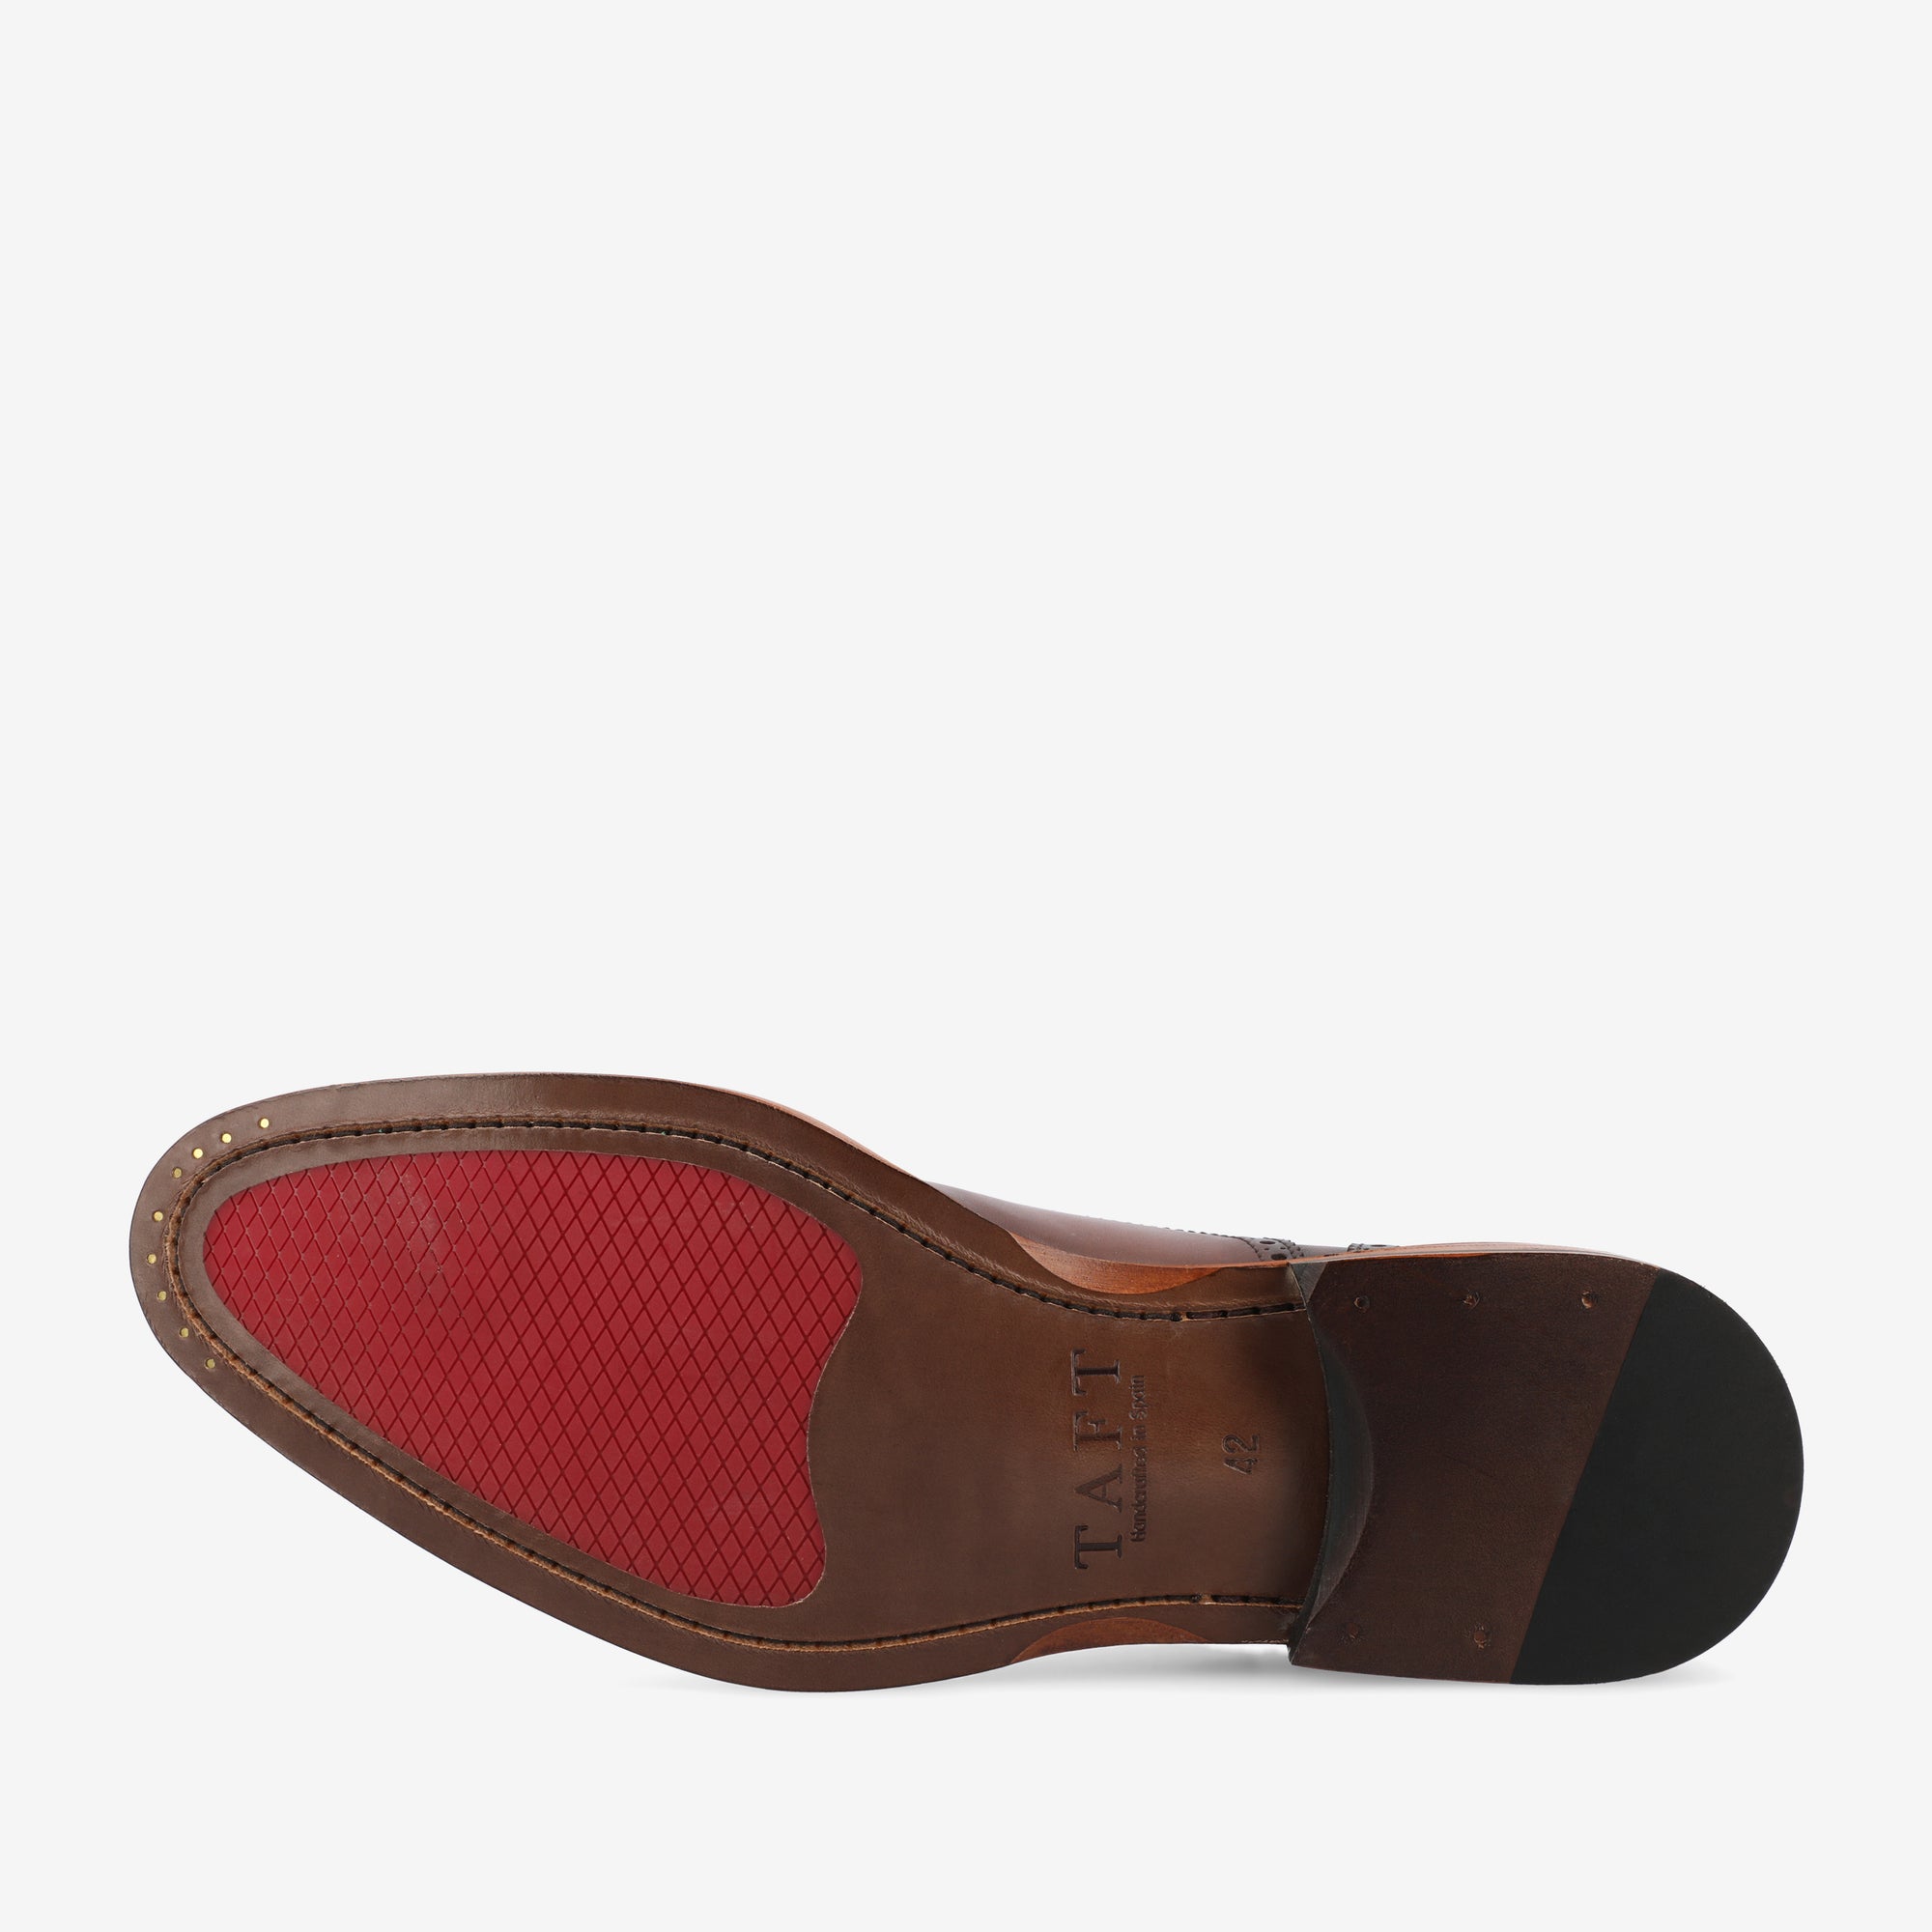 The Noah Shoe in Brown